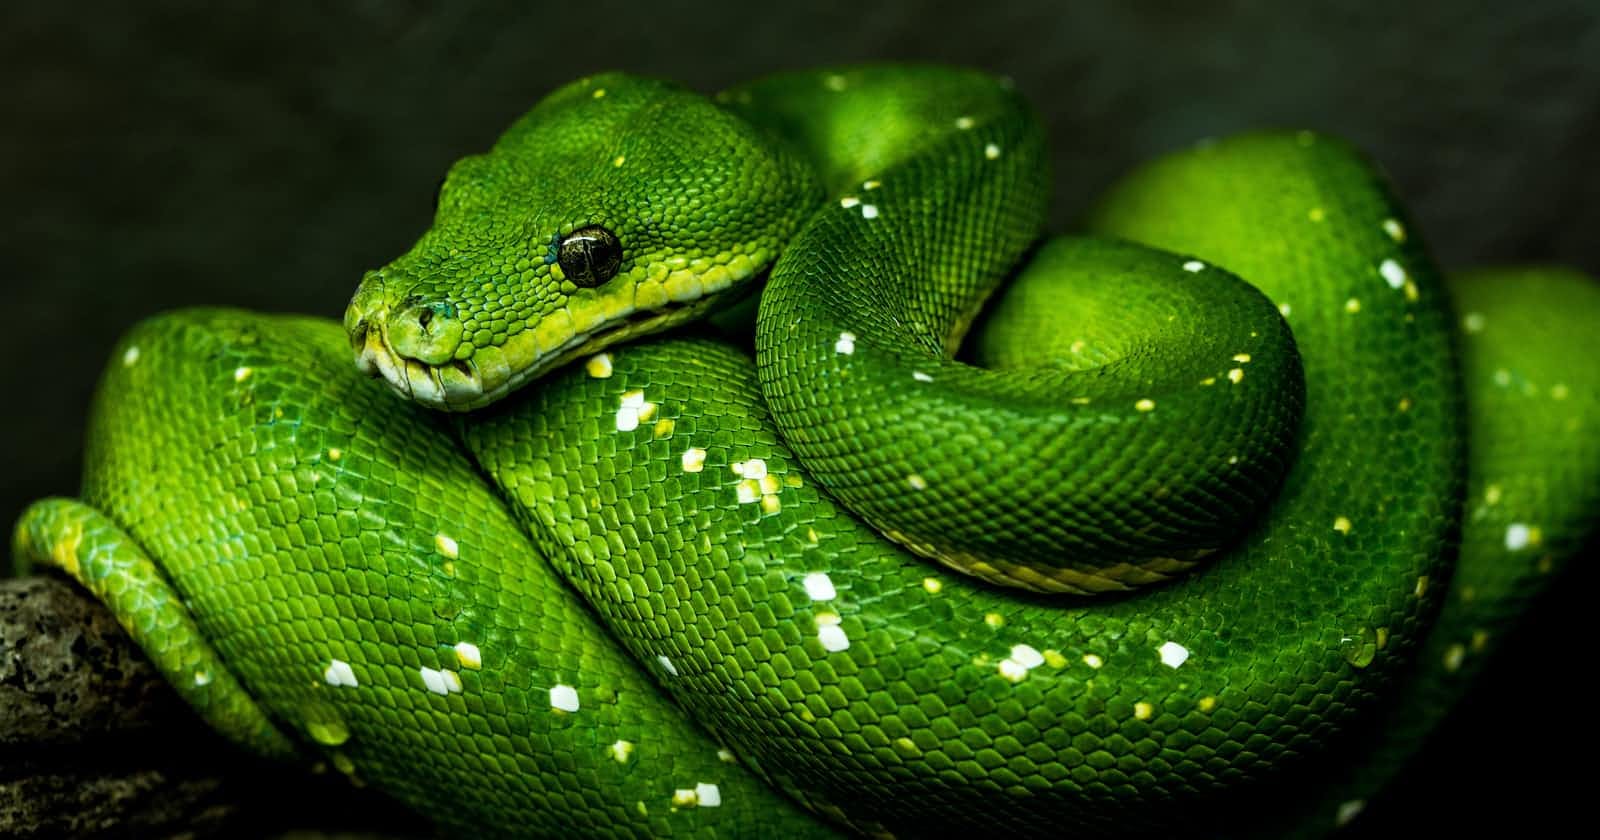 Python is cool.